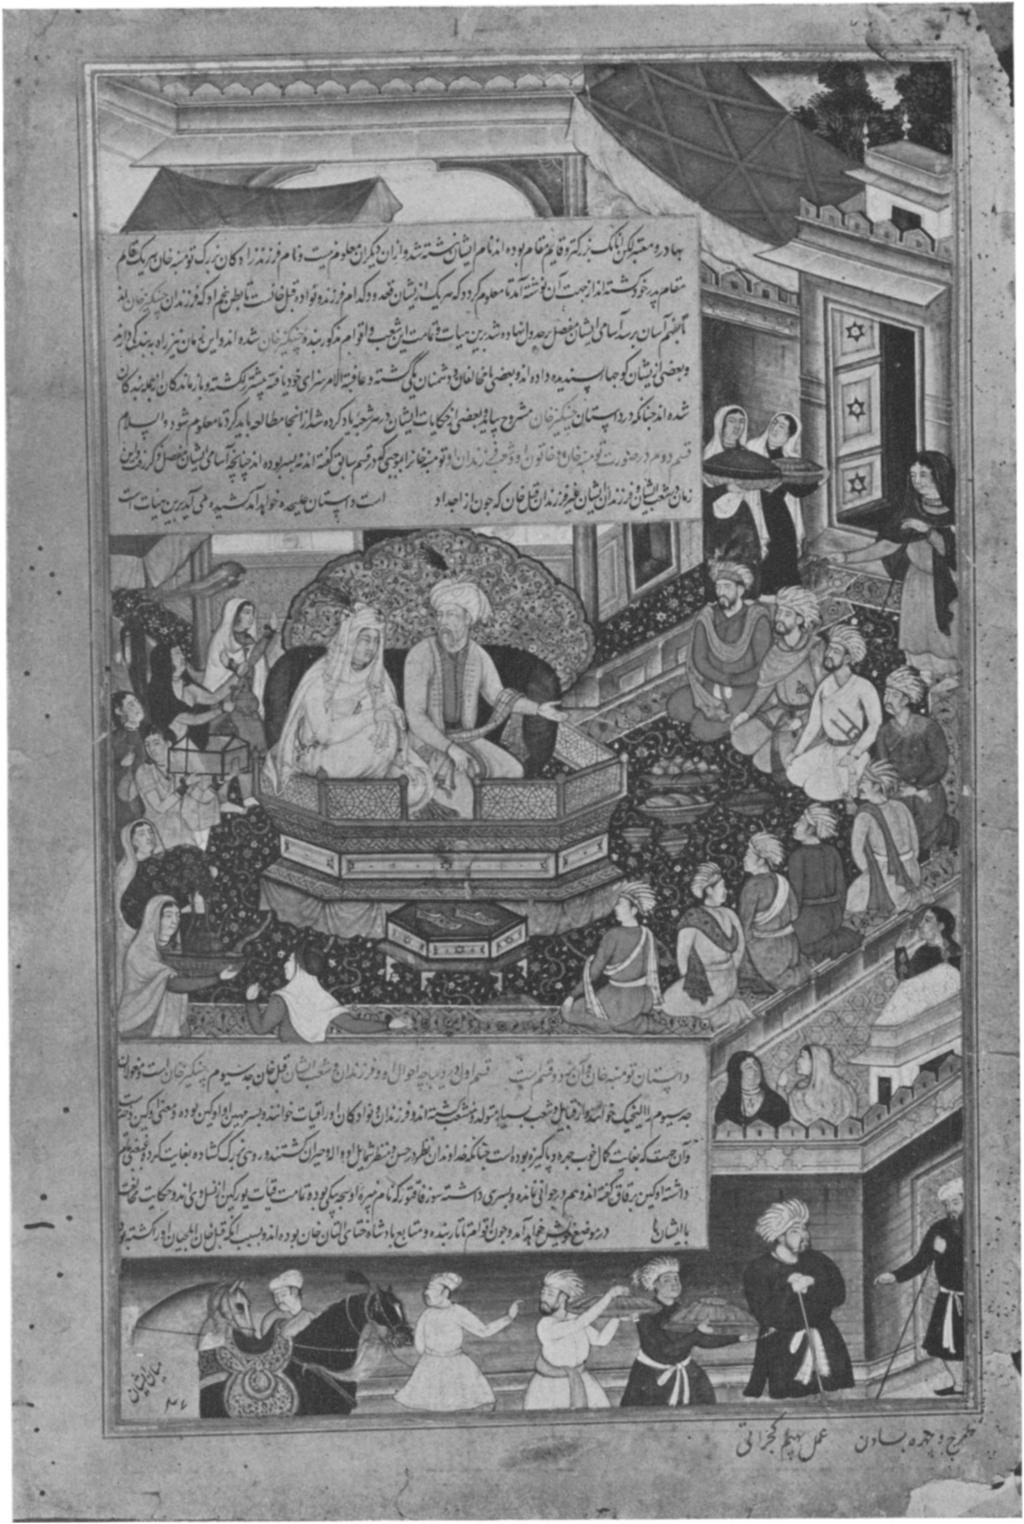 Chingiz Khan dividing the vast Mongol empire among his sons. Indian miniature by Basawan and Bhim Gujarati.